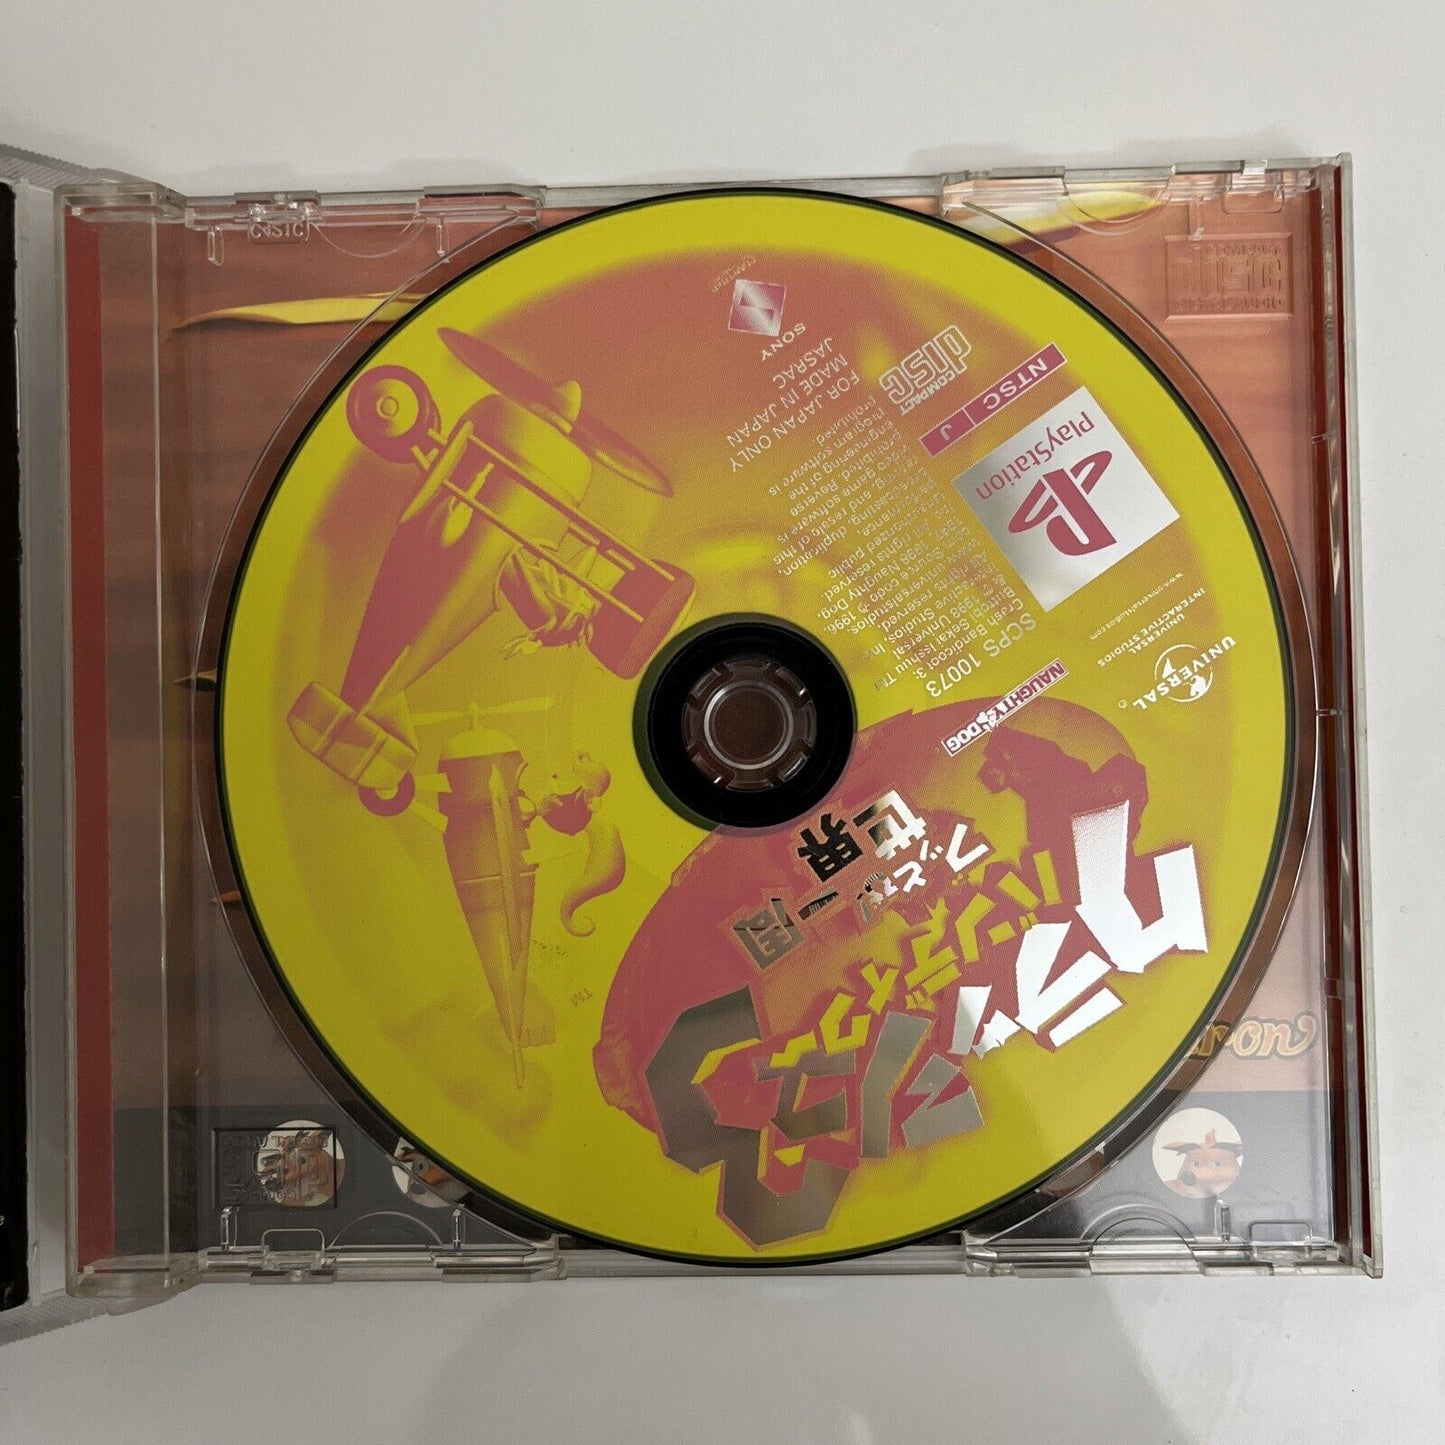 Crash Bandicoot 3 Warped - Sony PlayStation PS1 NTSC-J JAPAN Platformer Game